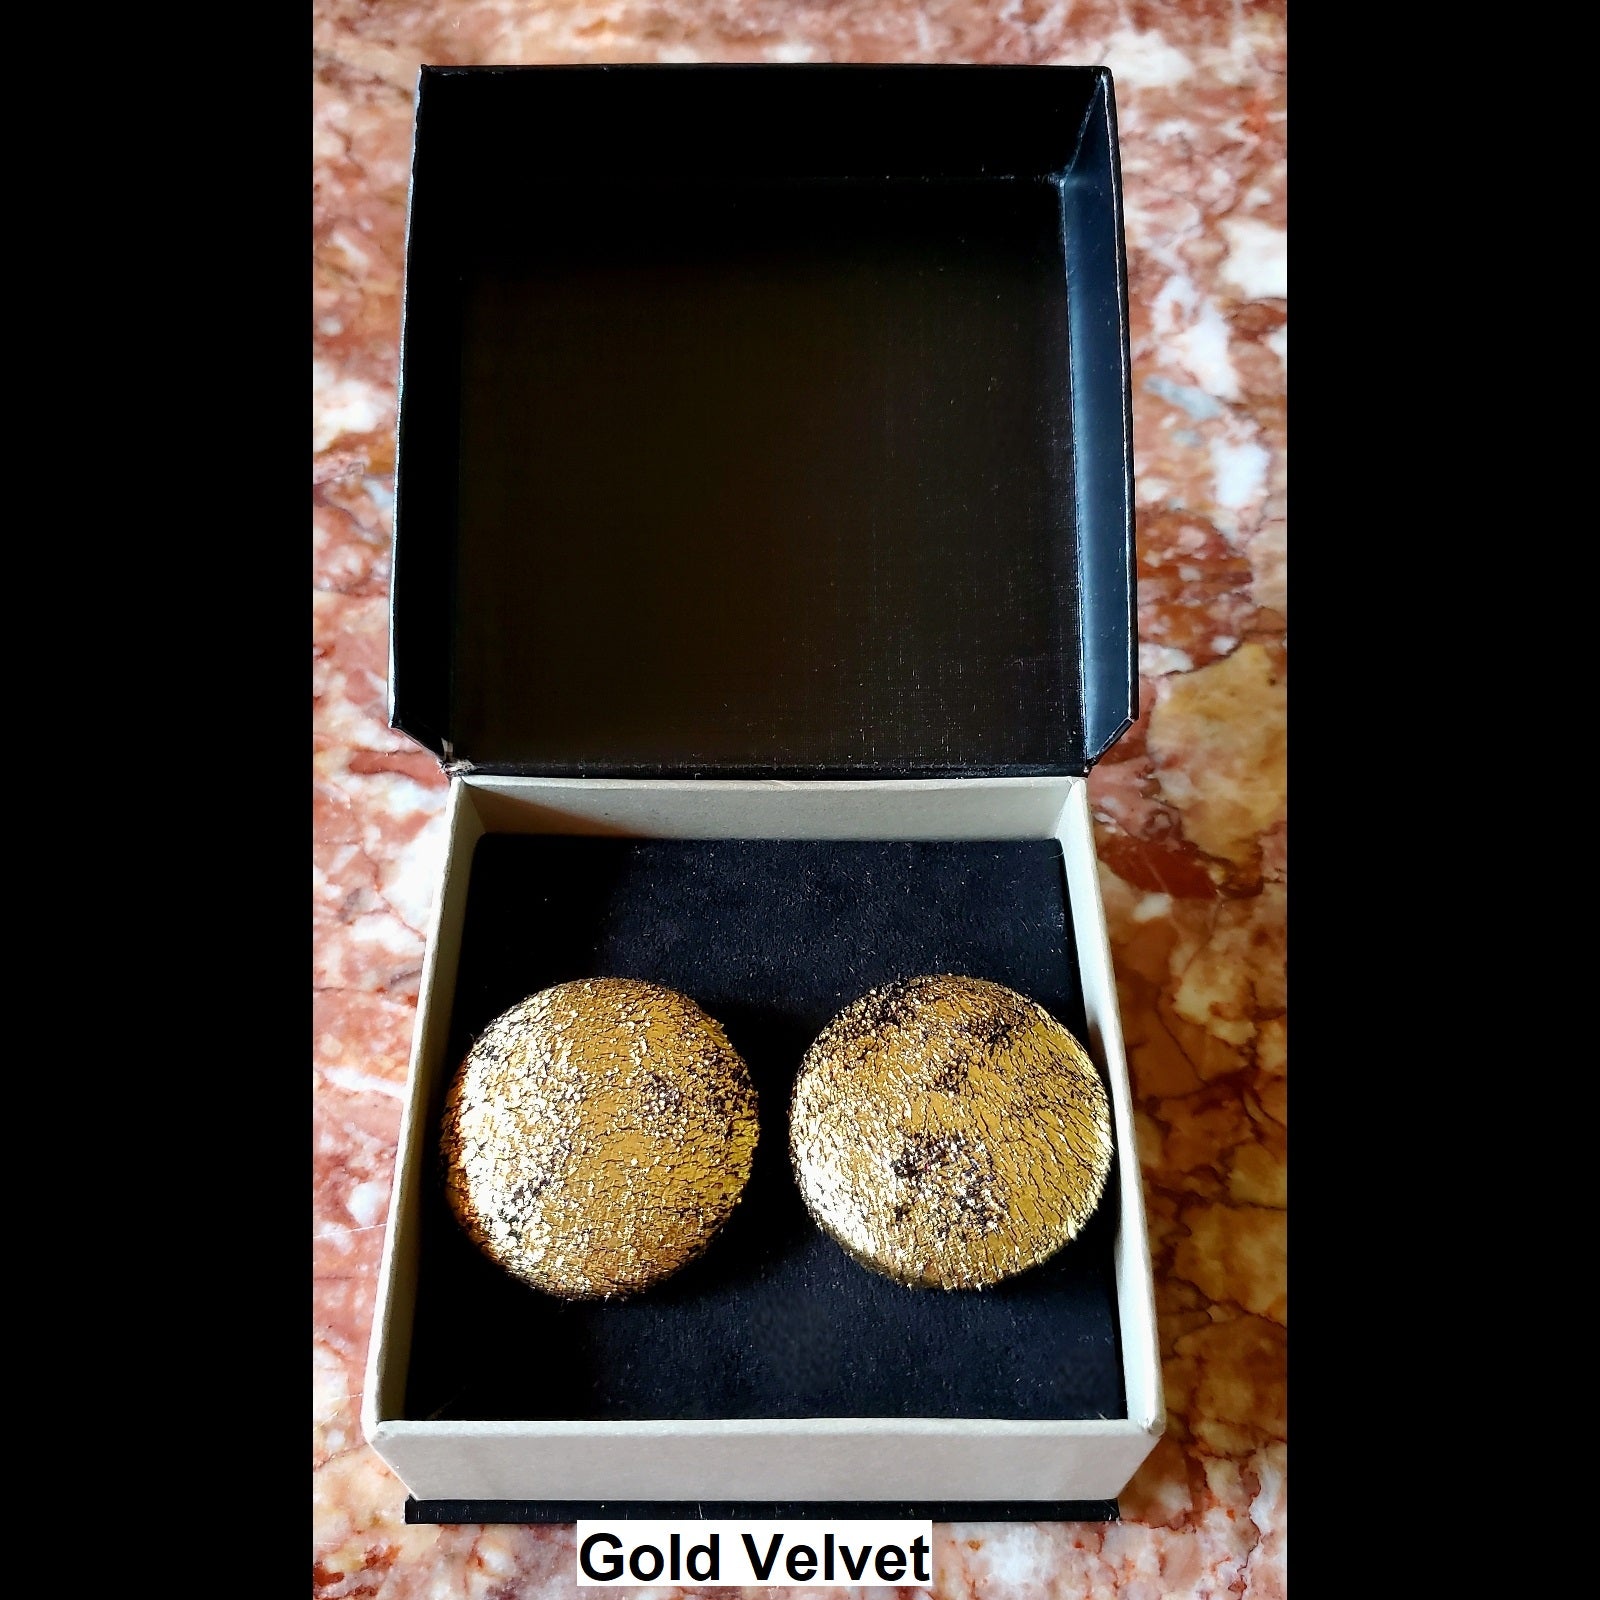 Gold velvet button earrings in jewelry box 